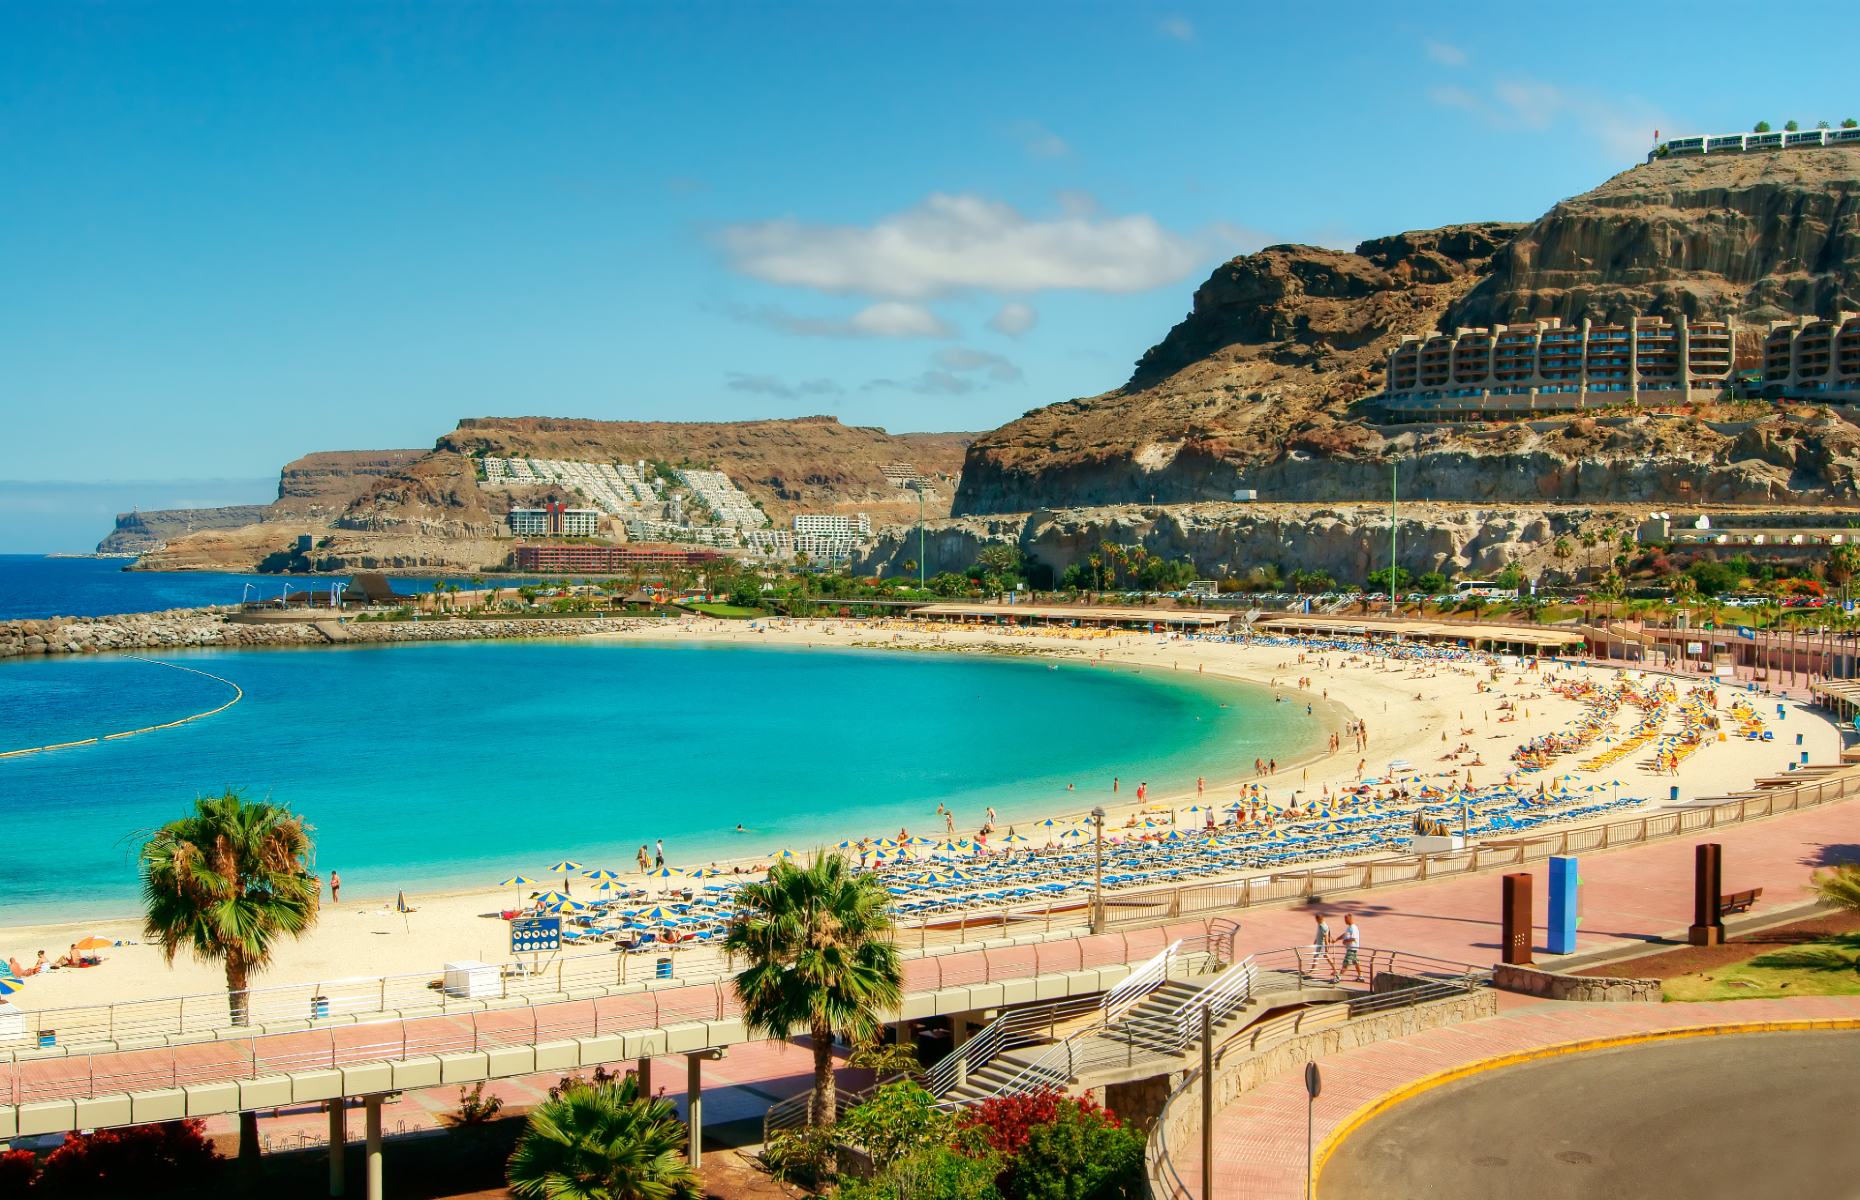 Gran Canaria beach (Image: Kalin Eftimov/Shutterstock)